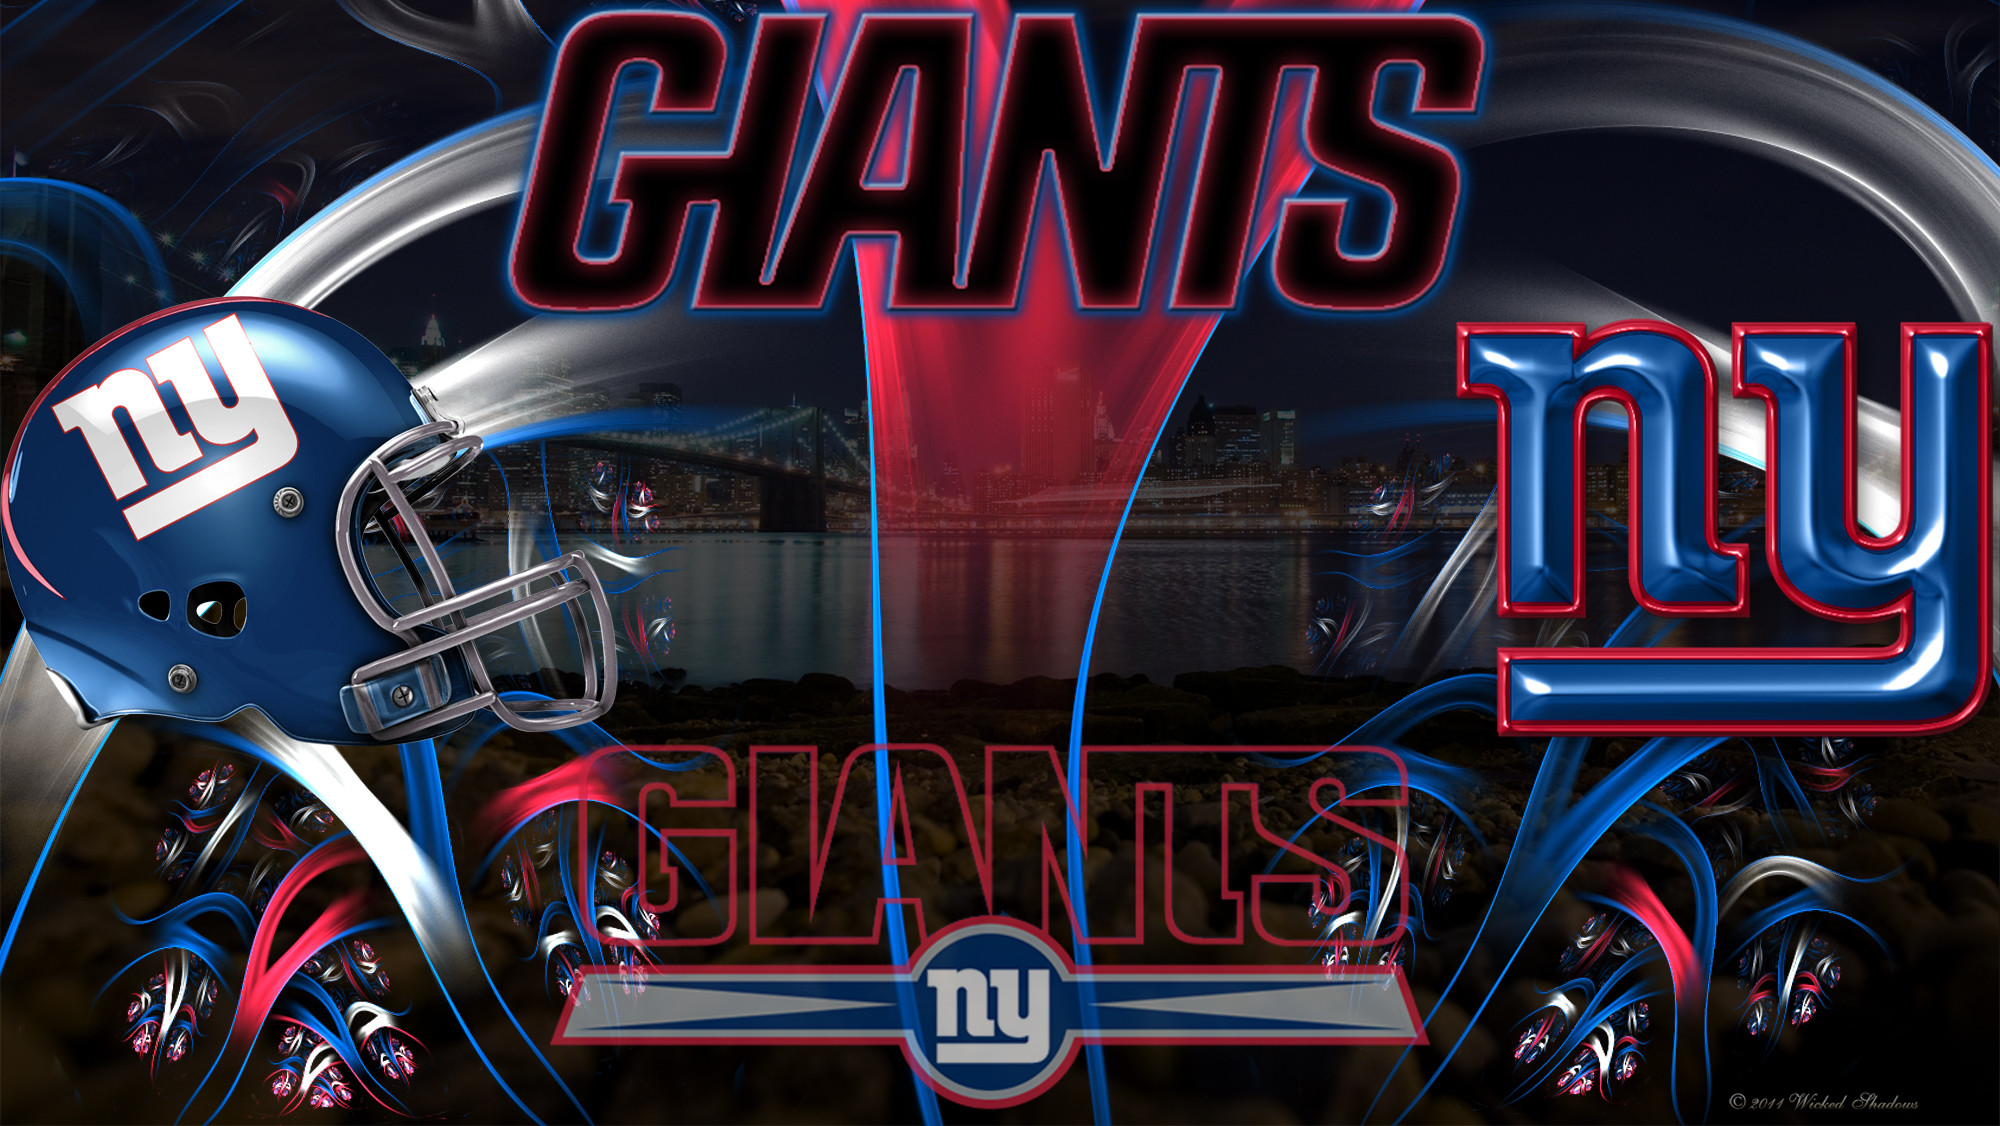 2000x1126 New York Giants images | New York Giants wallpapers